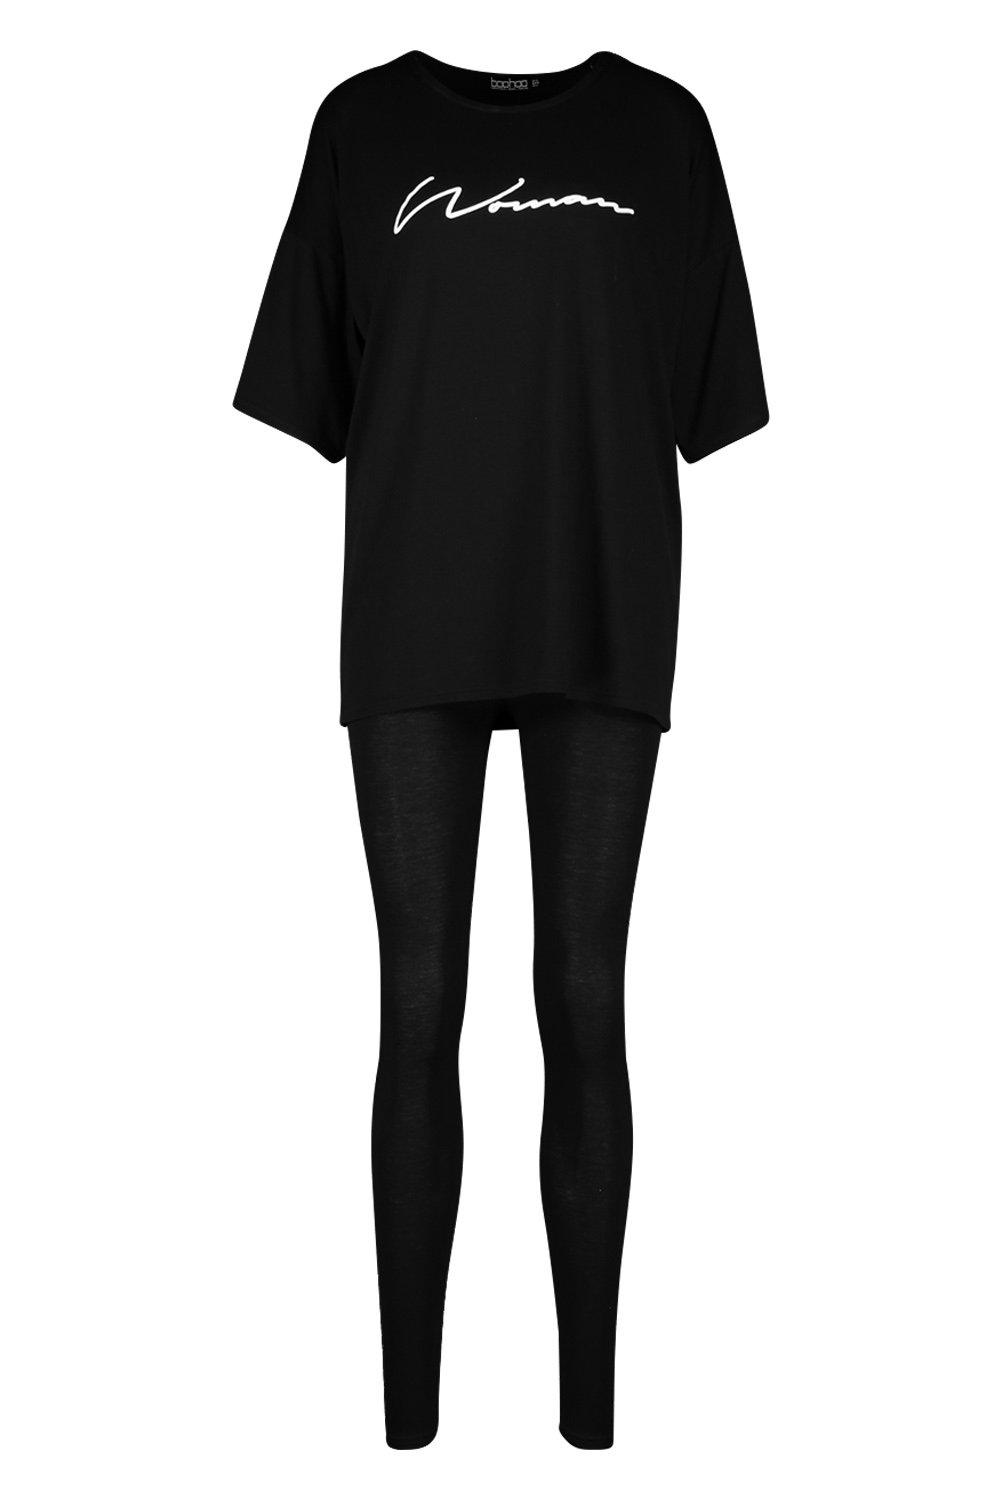 Buy Boohoo Baroque Print T Shirt And Leggings Set In Black